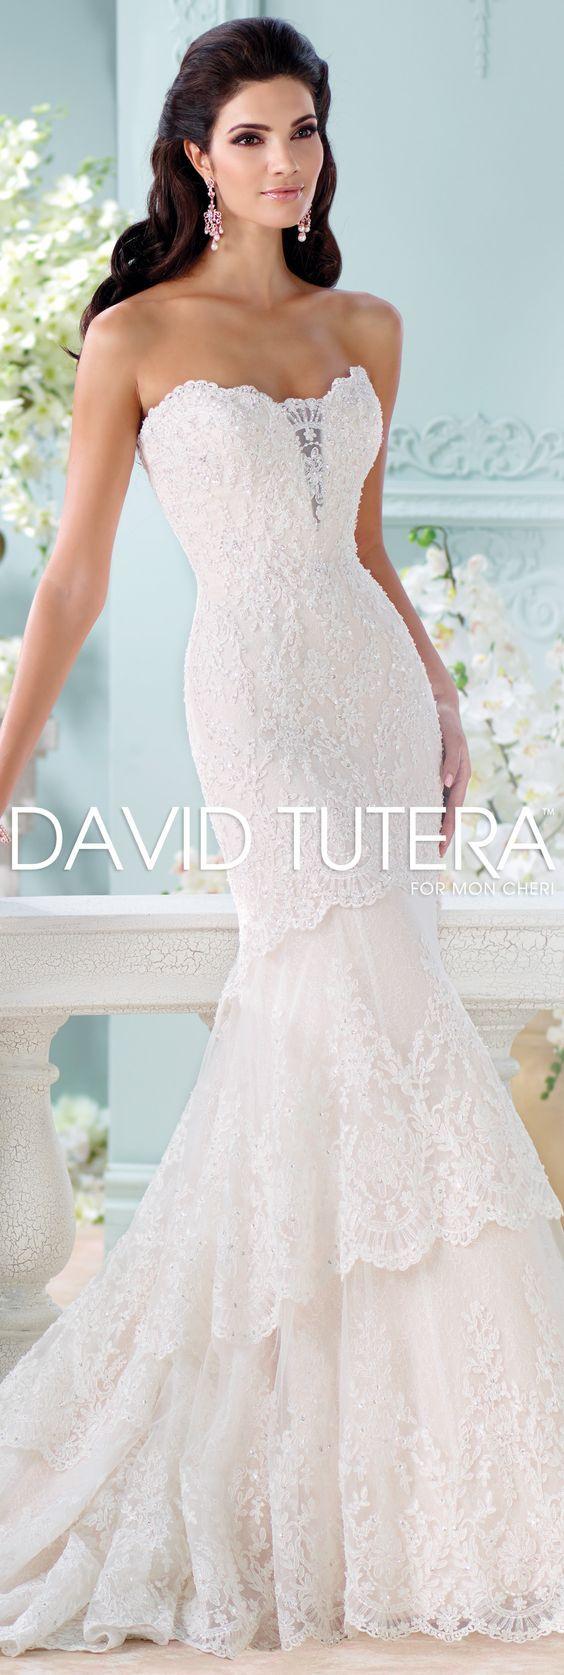 زفاف - Gorgeous Wedding Dresses By David Tutera For Mon Cheri